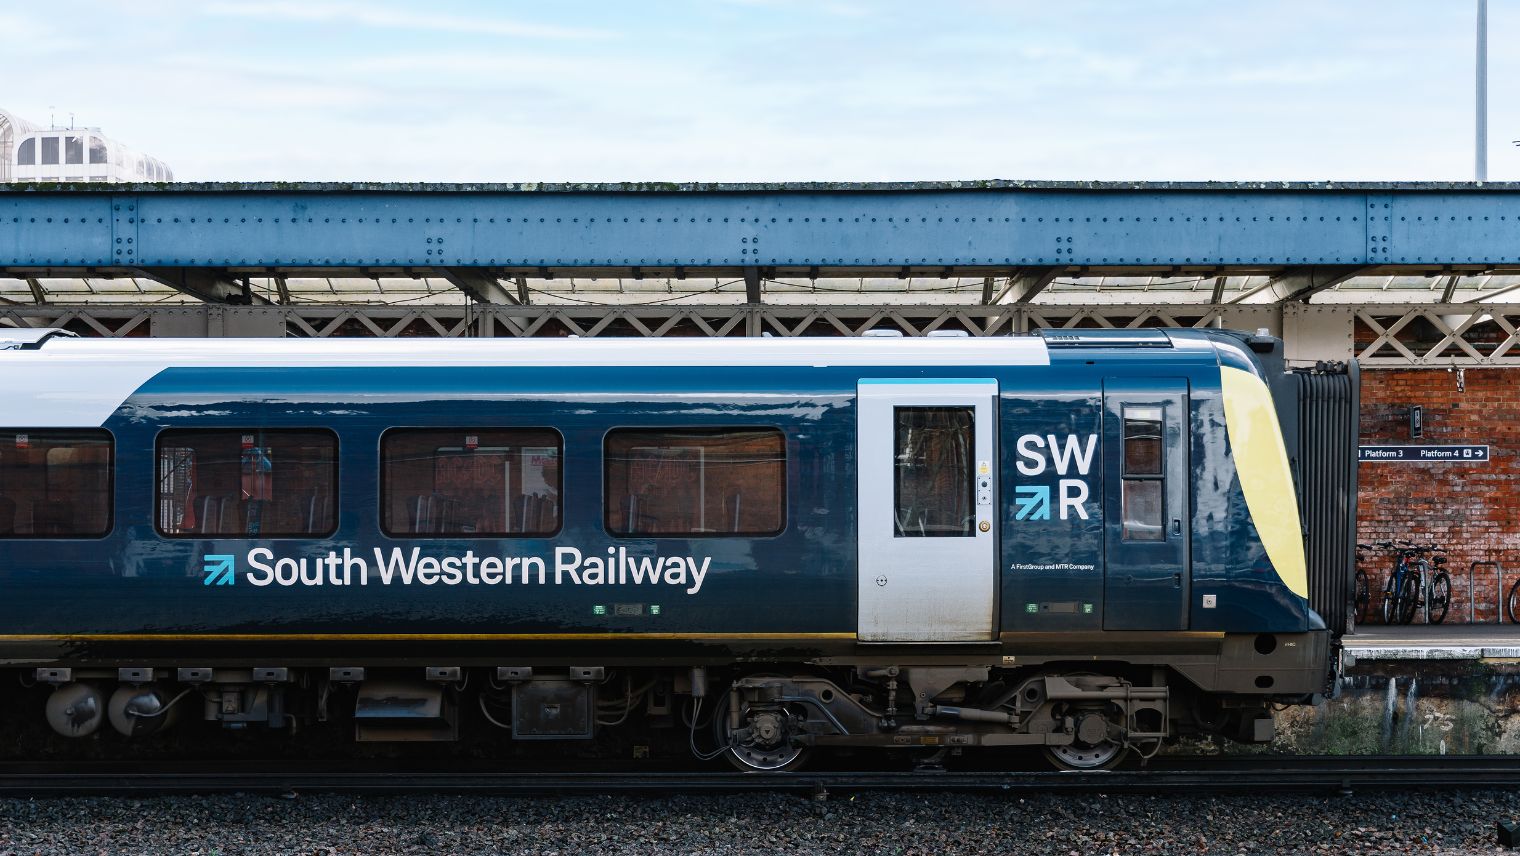 A South Western Railway class 444 train on platform 19 at London Waterloo station 